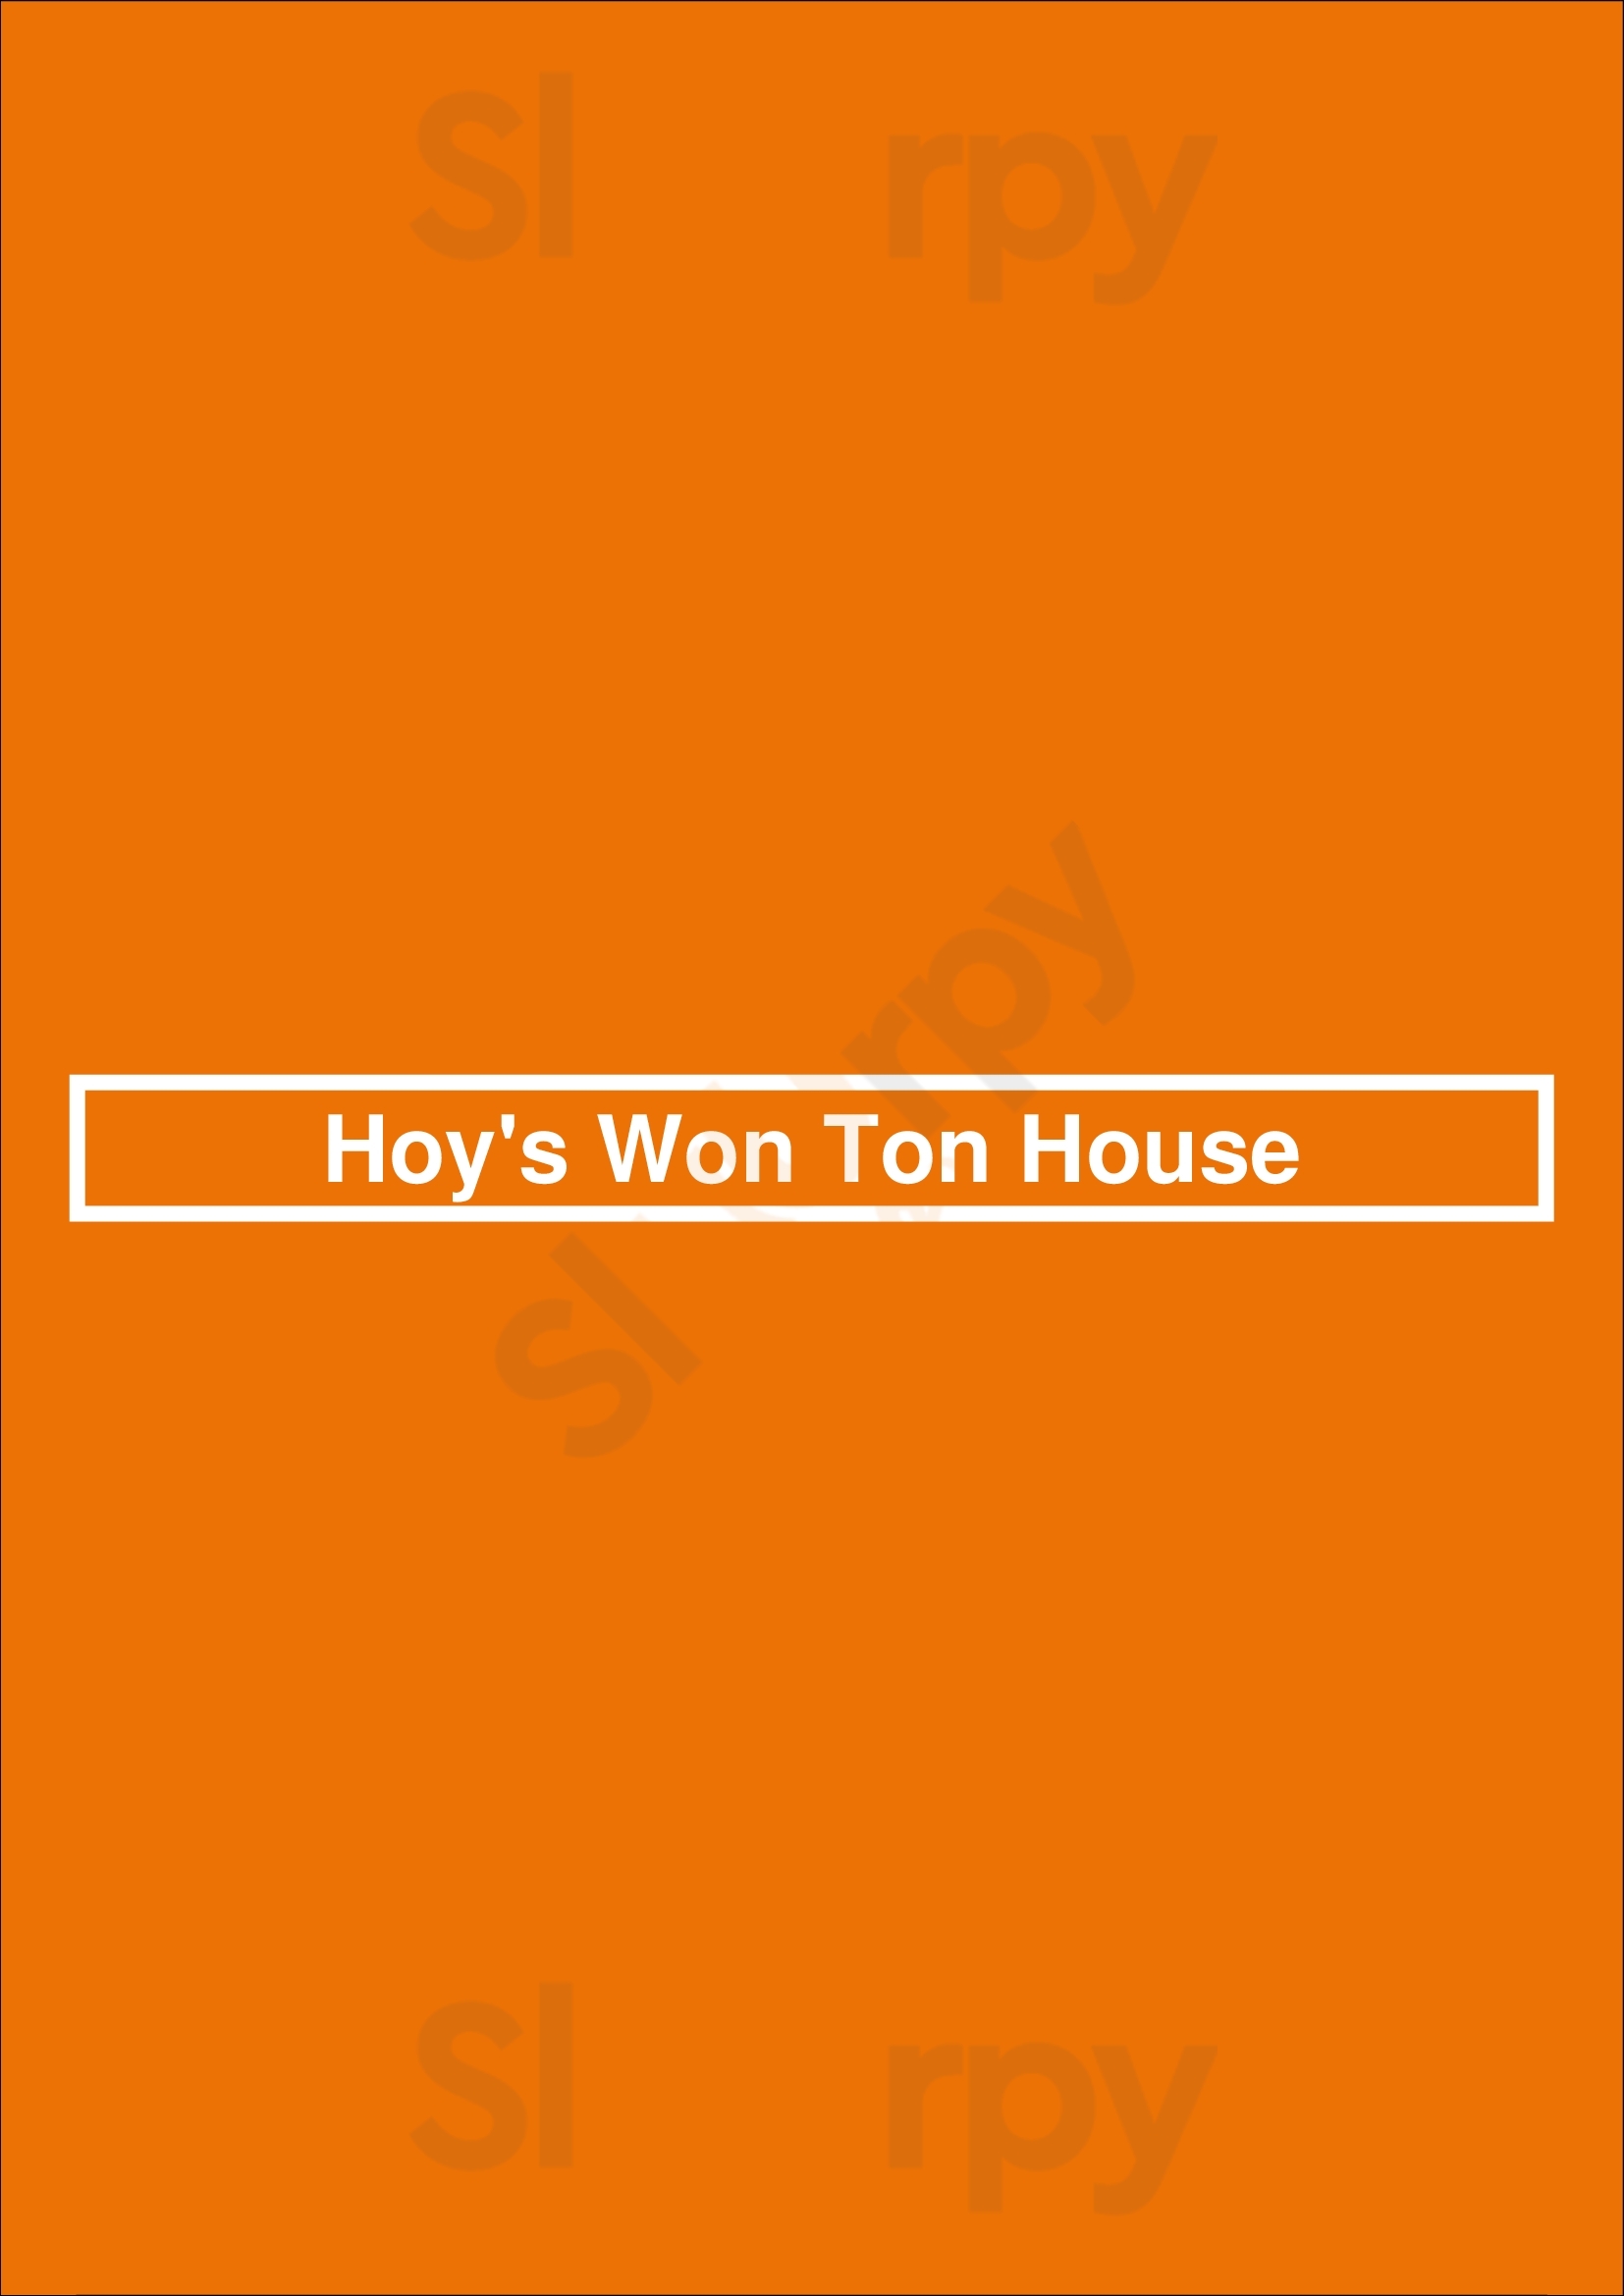 Hoy's Won Ton House Vancouver Menu - 1